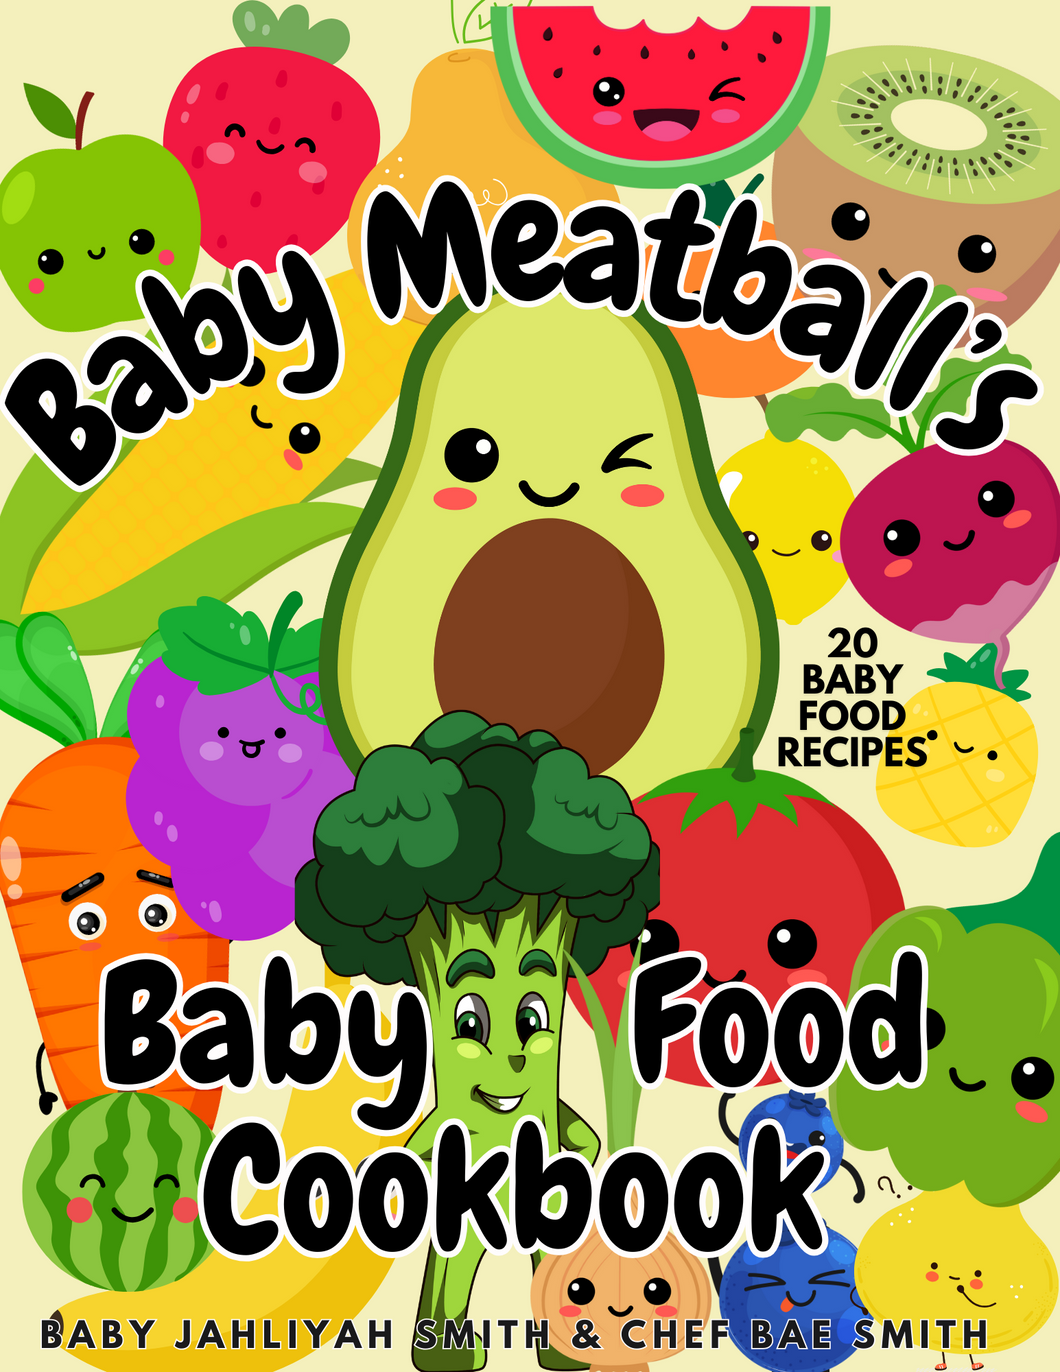 Baby Meatball's Baby Food E-Cookbook